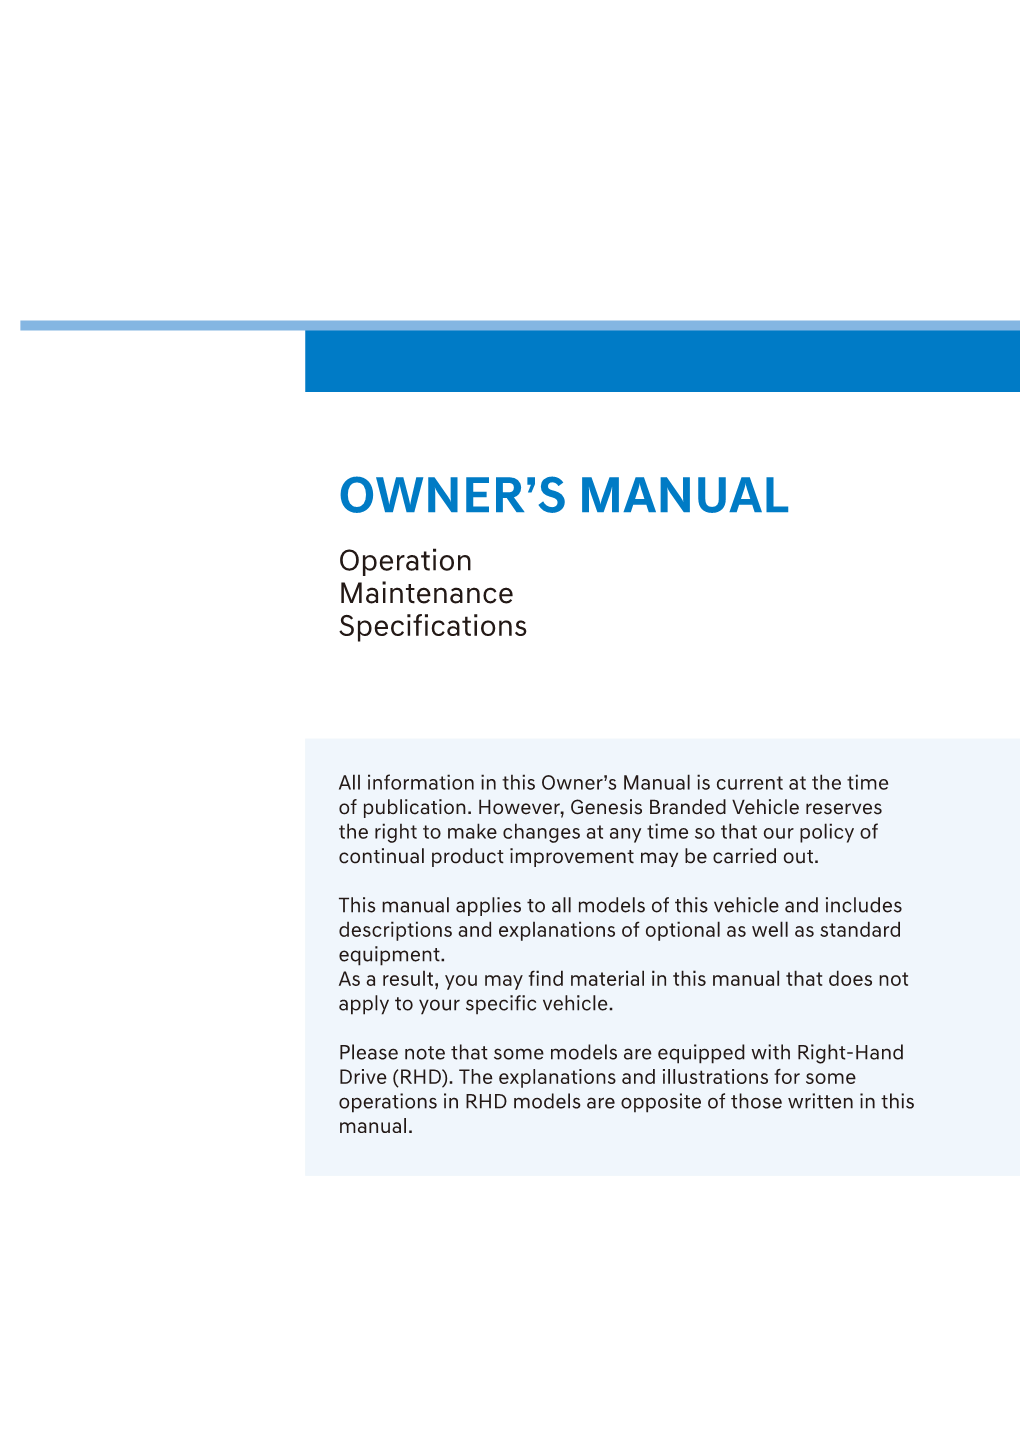 Owners Manual G80 English Pdf, 11.6 Mb